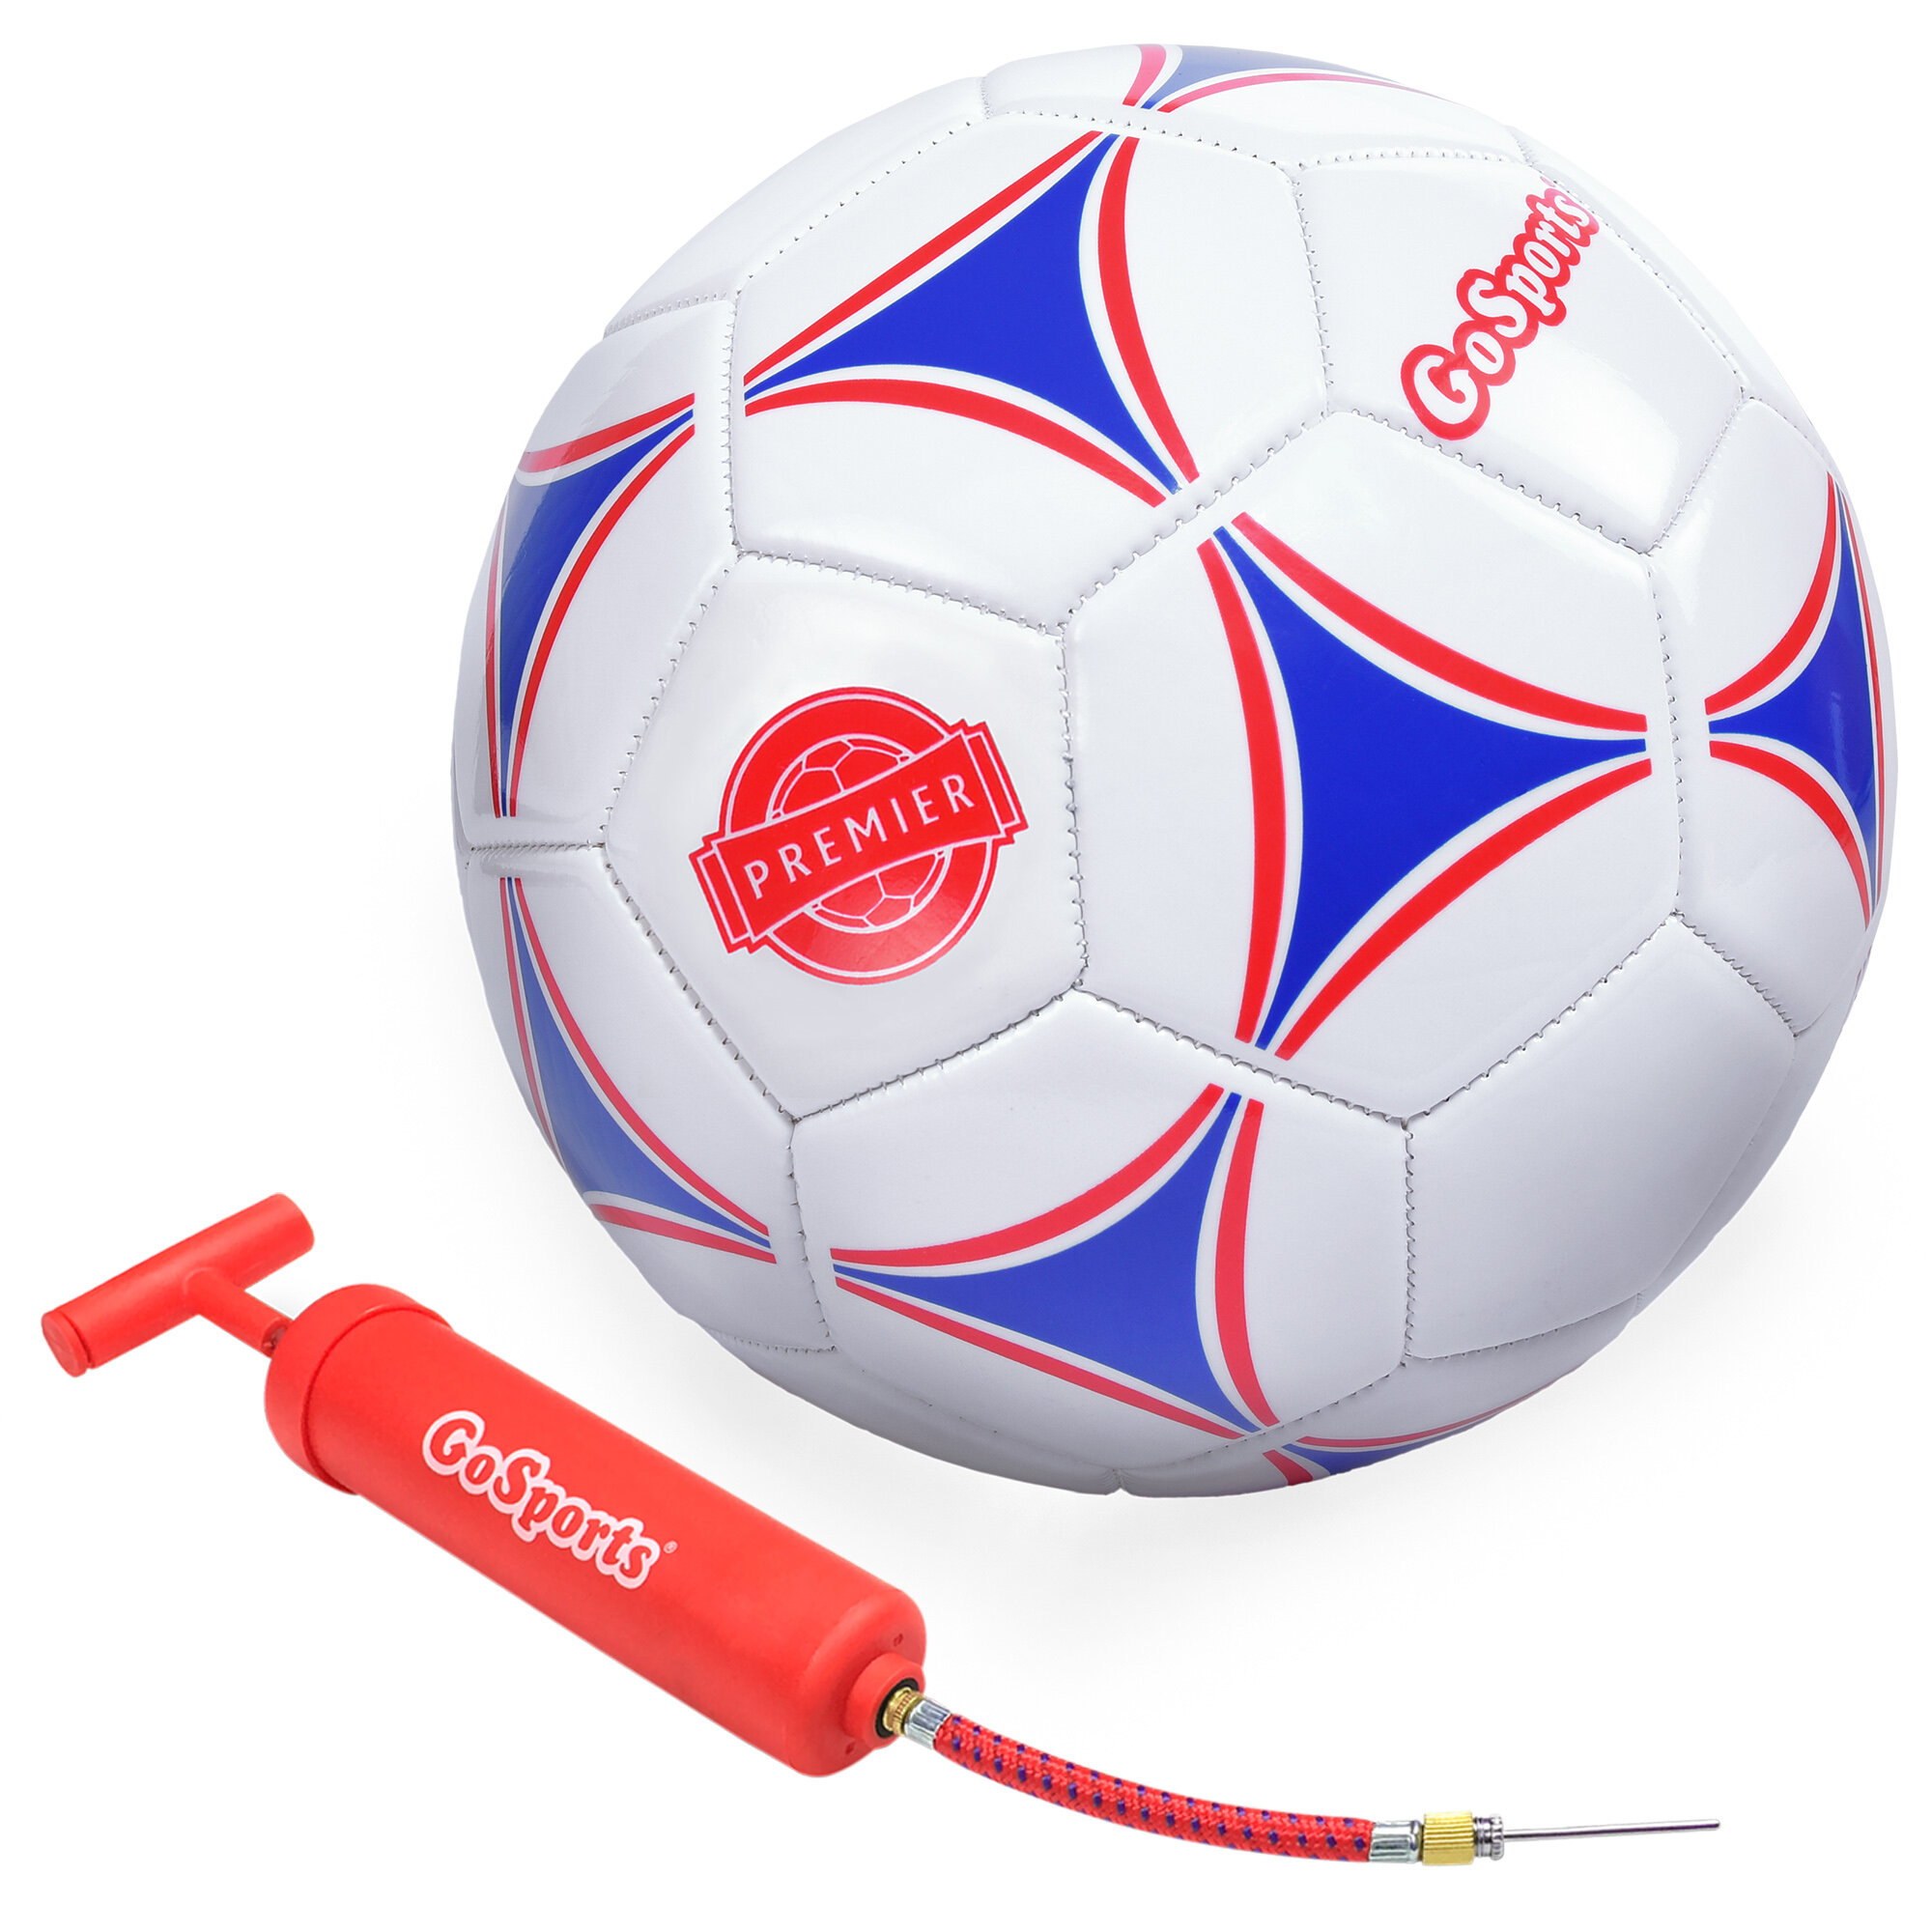 GoSports Classic Soccerball with Premium Pump Size 4 